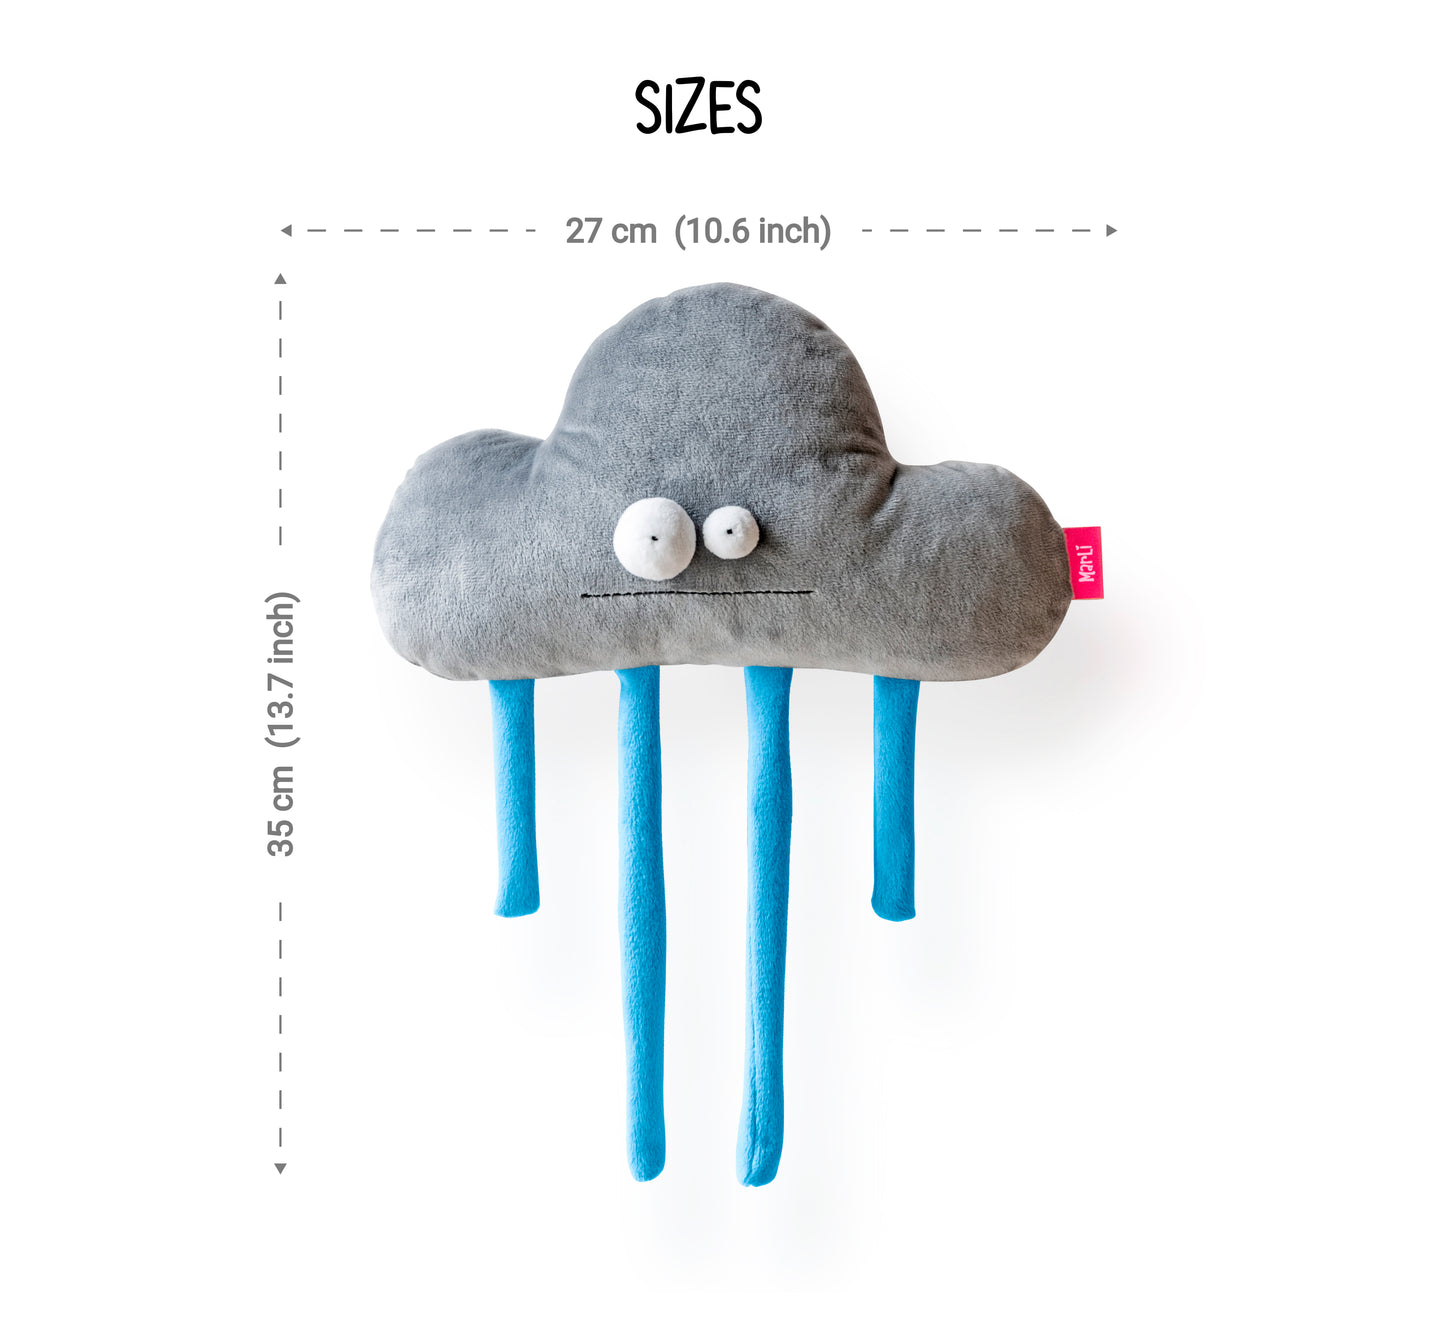 Rainy Cloud, plush toy